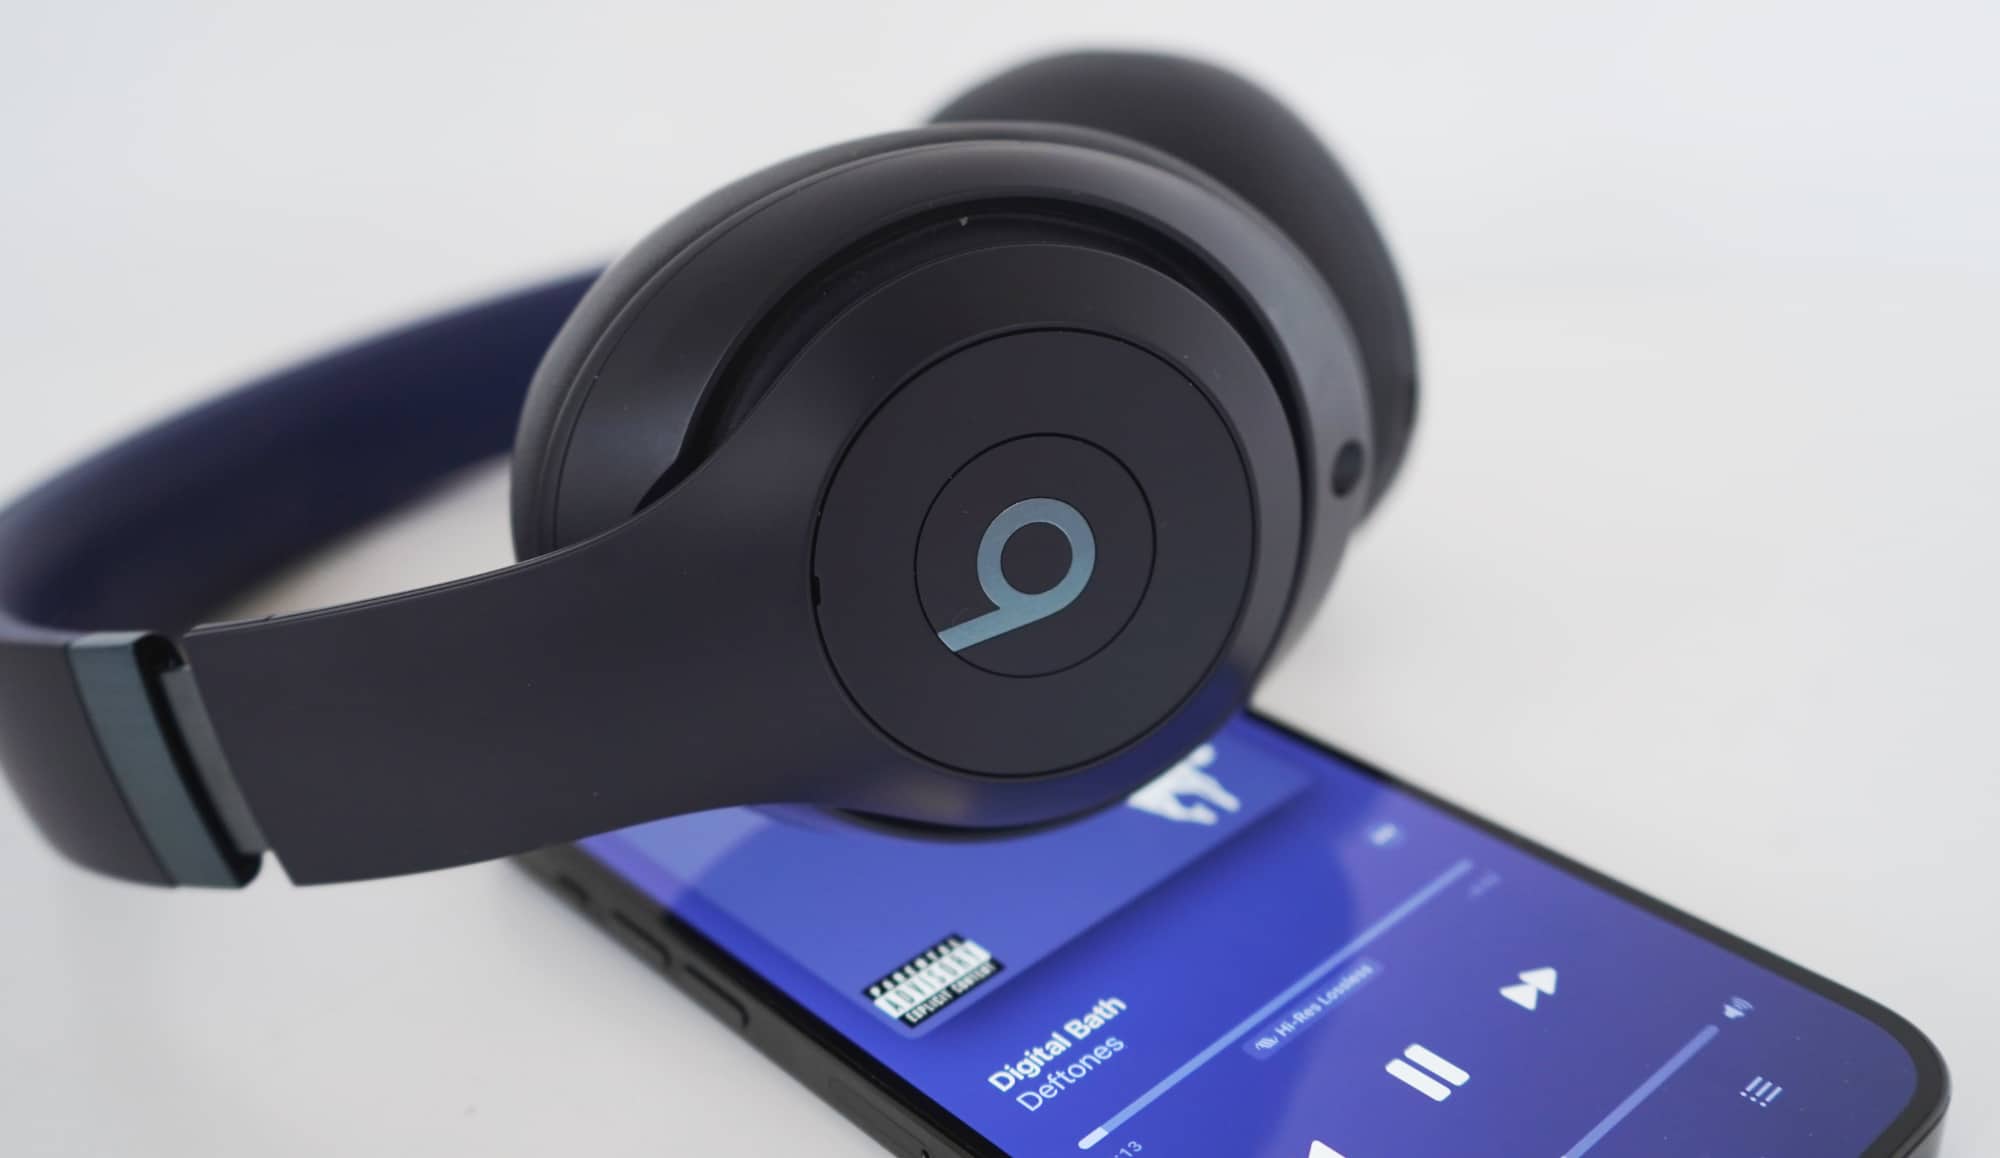 Beats Studio 3 wireless noise-cancelling headphones review